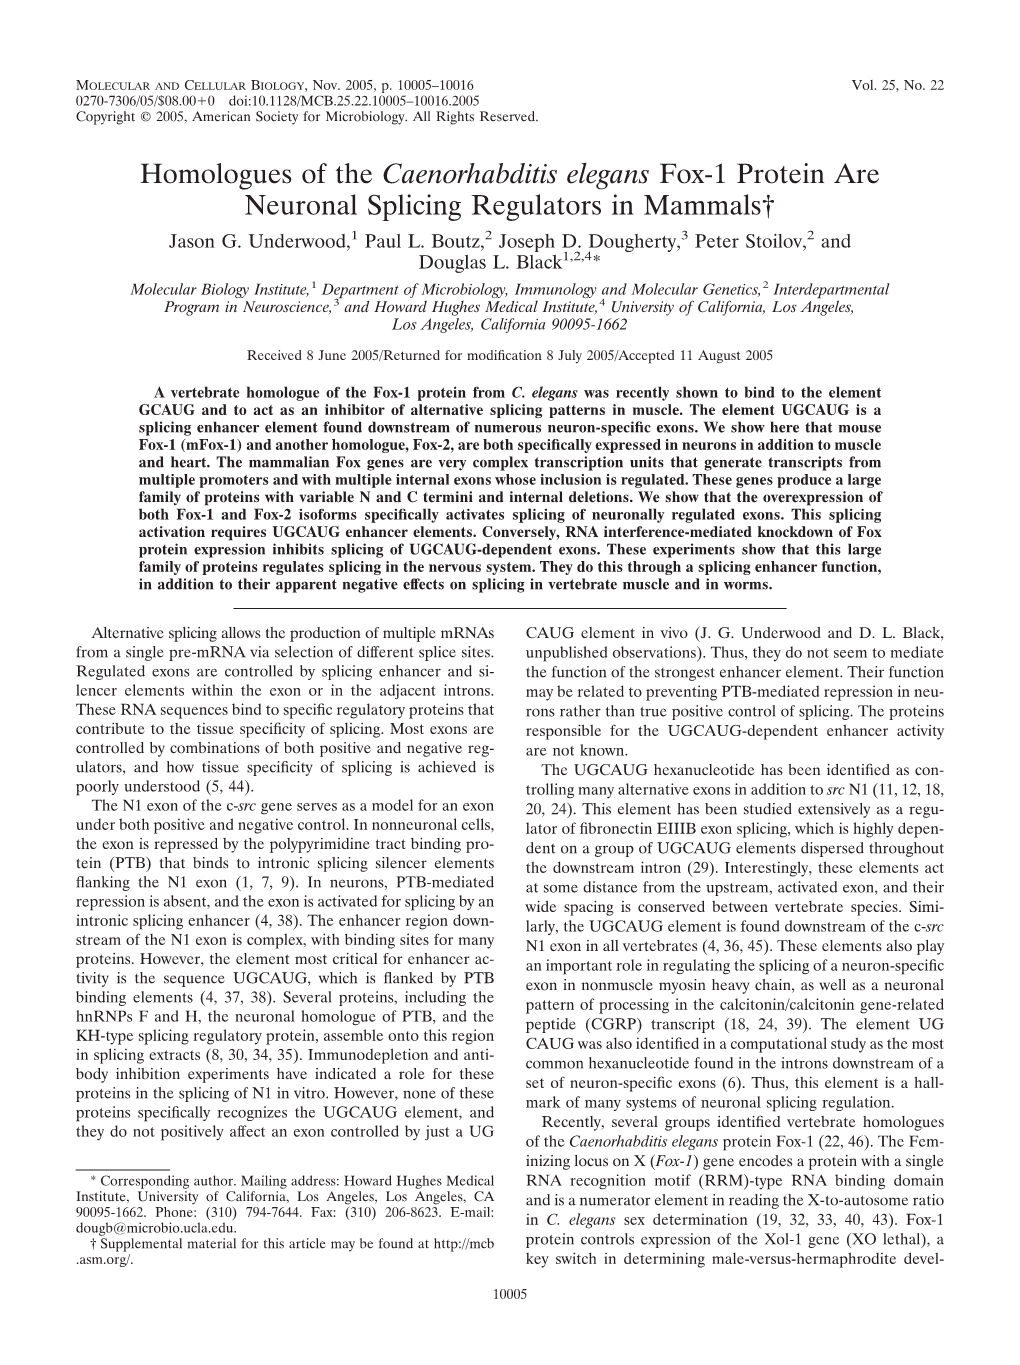 Homologues of the Caenorhabditis Elegans Fox-1 Protein Are Neuronal Splicing Regulators in Mammals† Jason G